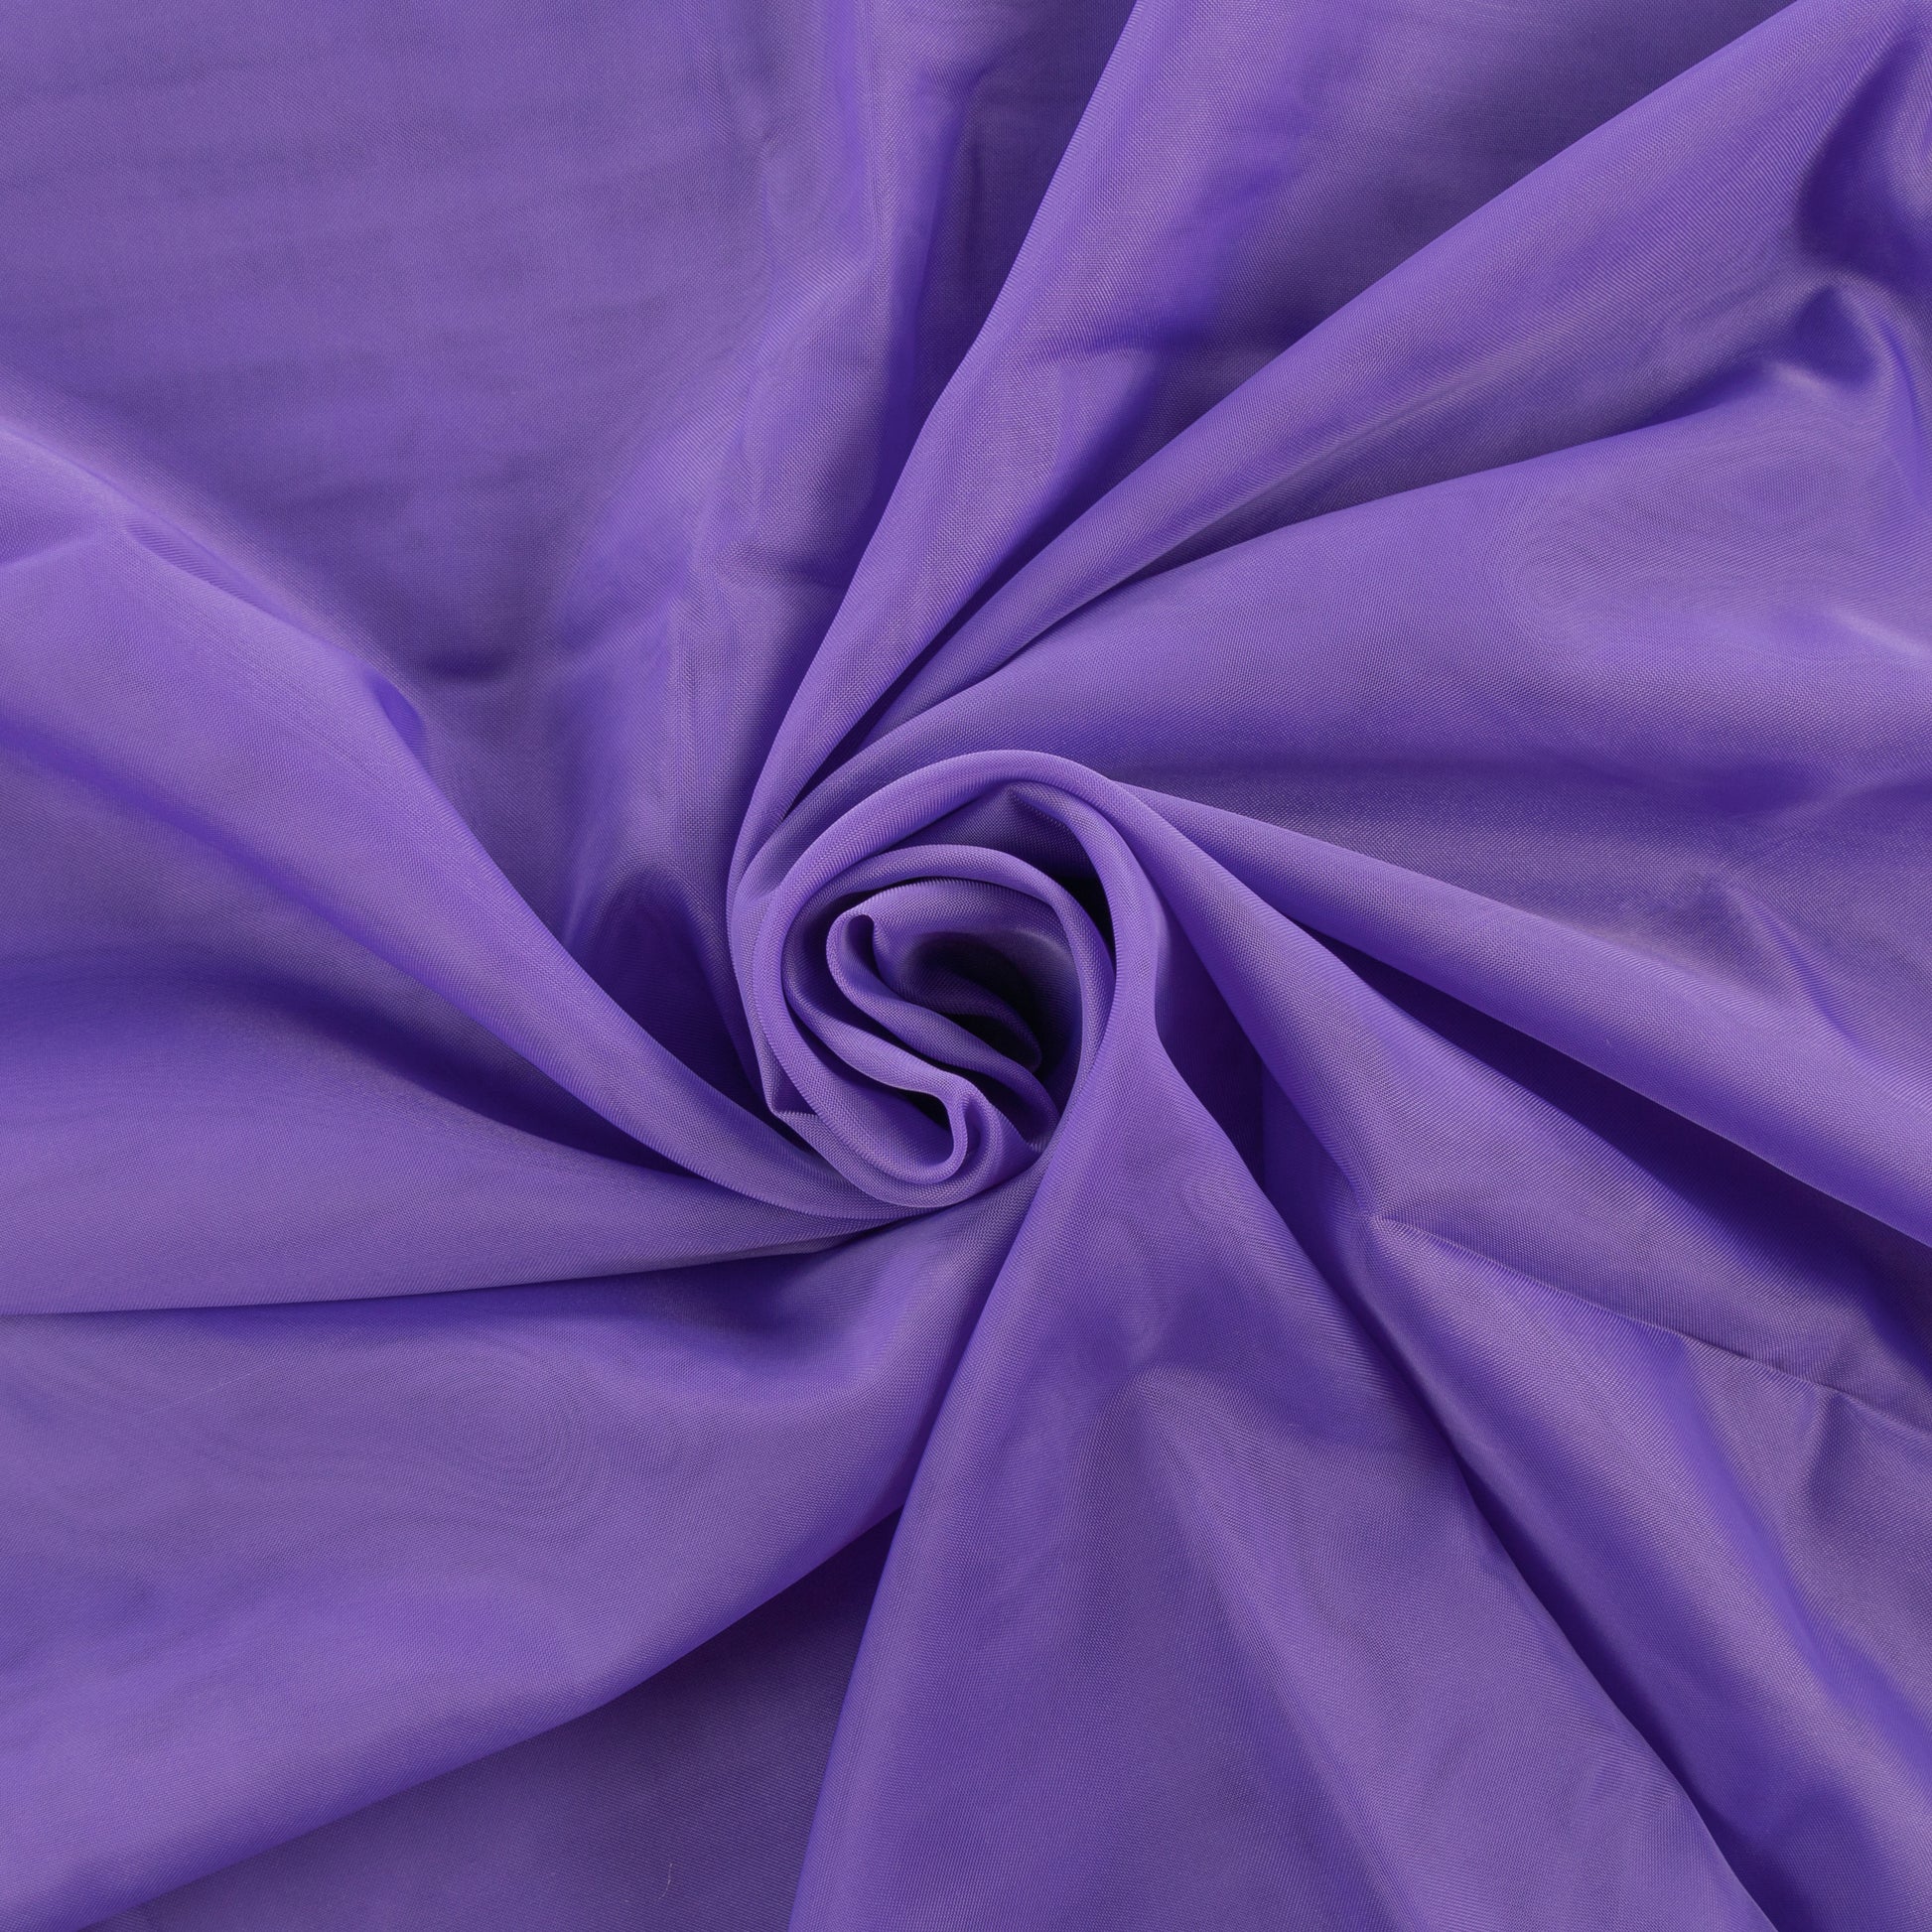 10 yards x 118" Flame Retardant (FR) Voile Sheer Fabric Roll/Bolt - Purple - CV Linens